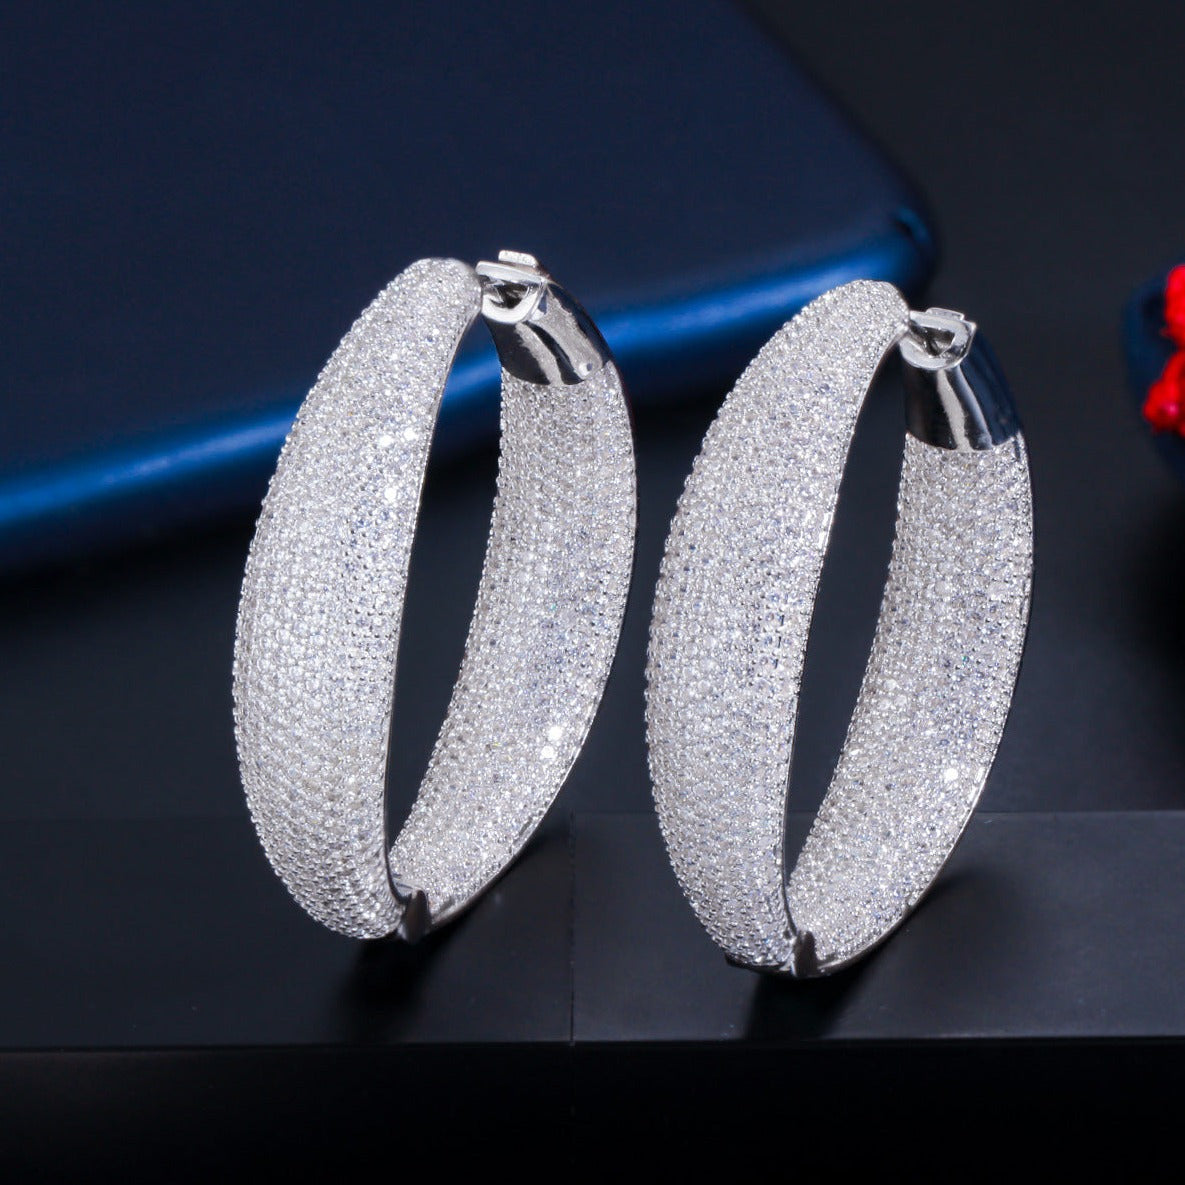 MiniLux "Comoo" earrings